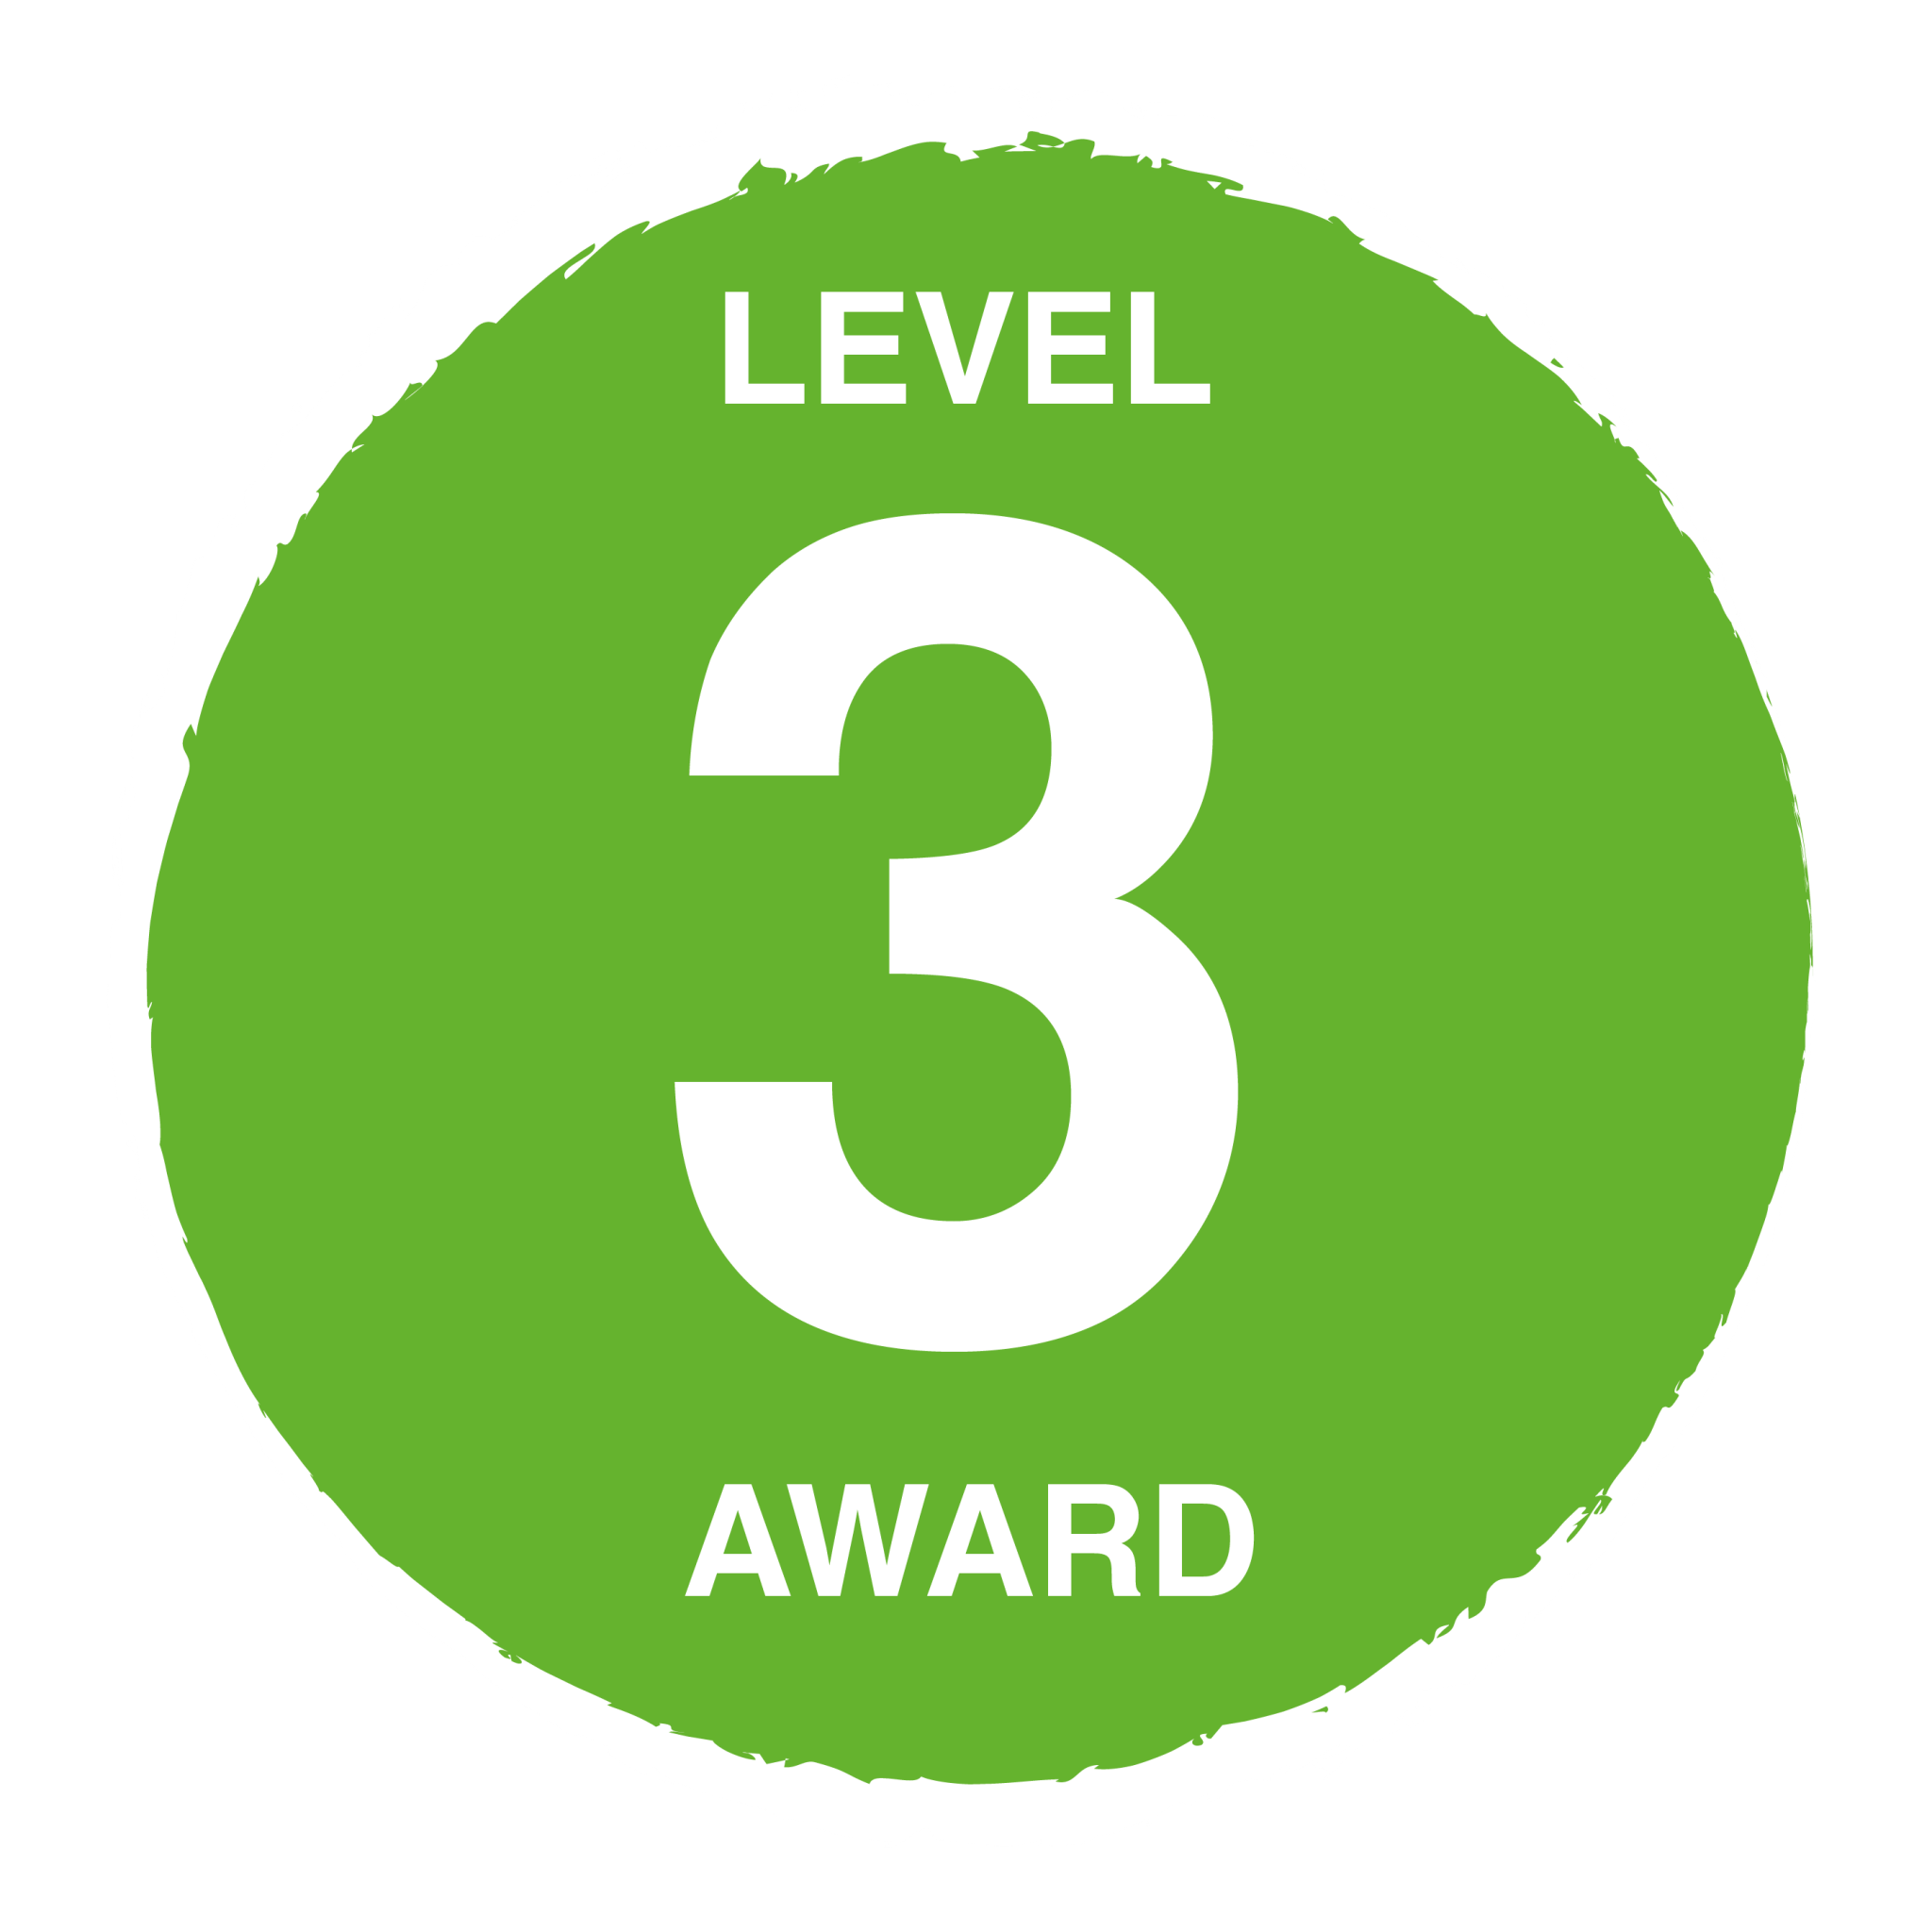 Level 3 Award